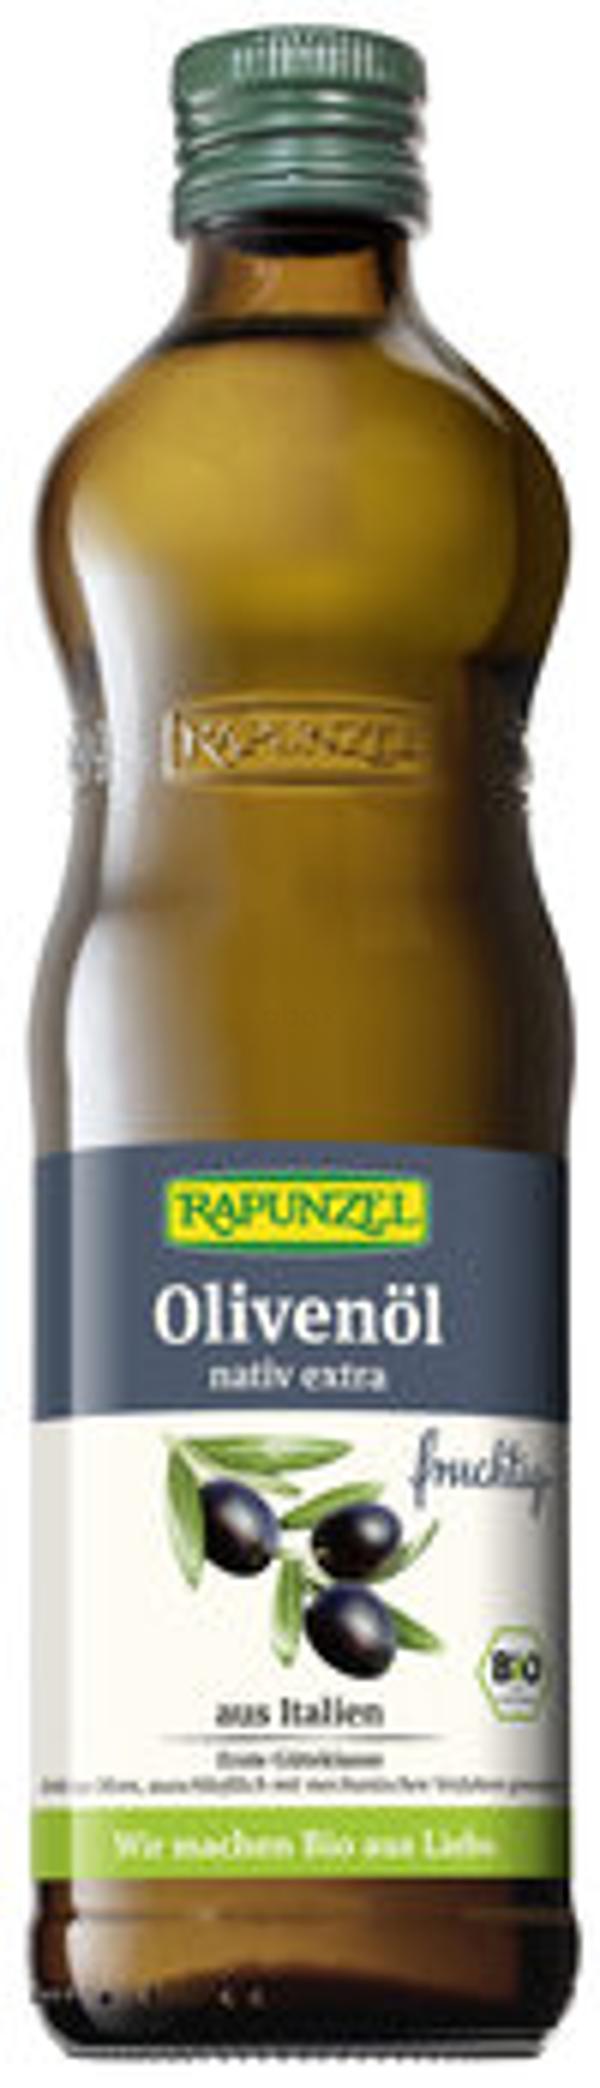 Produktfoto zu Olivenöl " nativ" extra, fruchtig 0,5l